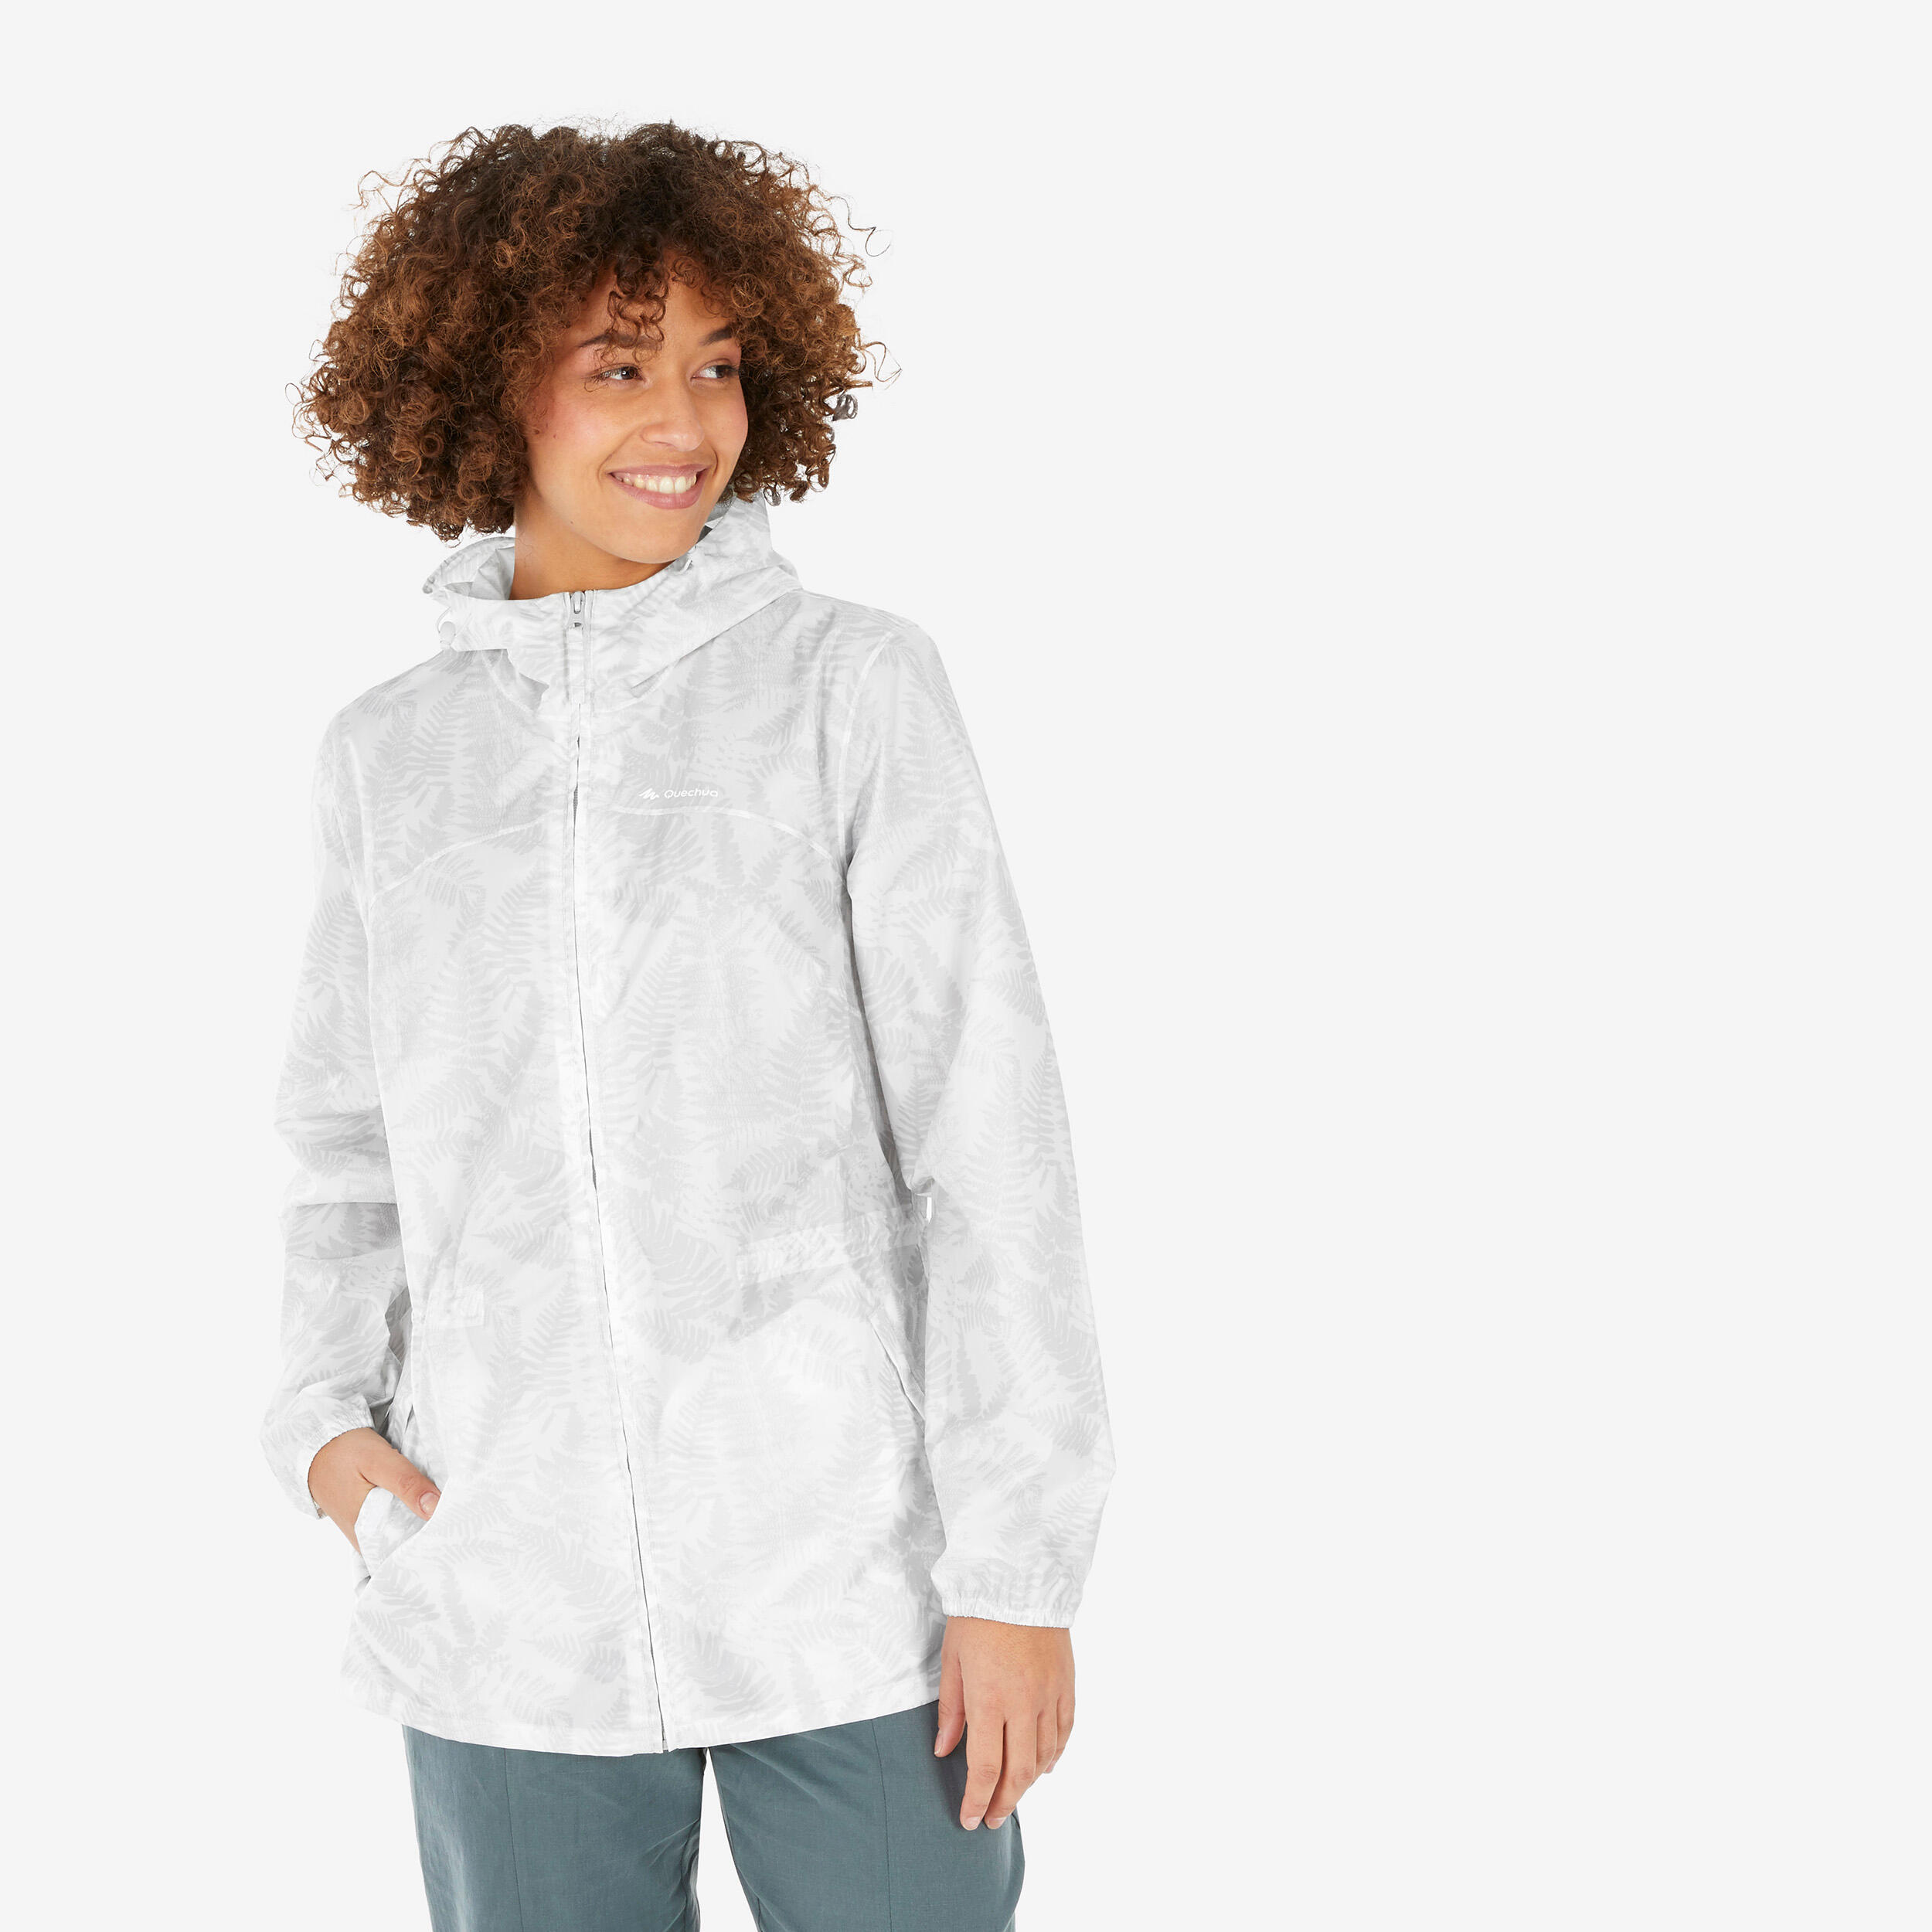 Tribord black mens waterproof windproof jacket decathlon creation size XS  (0603) | eBay